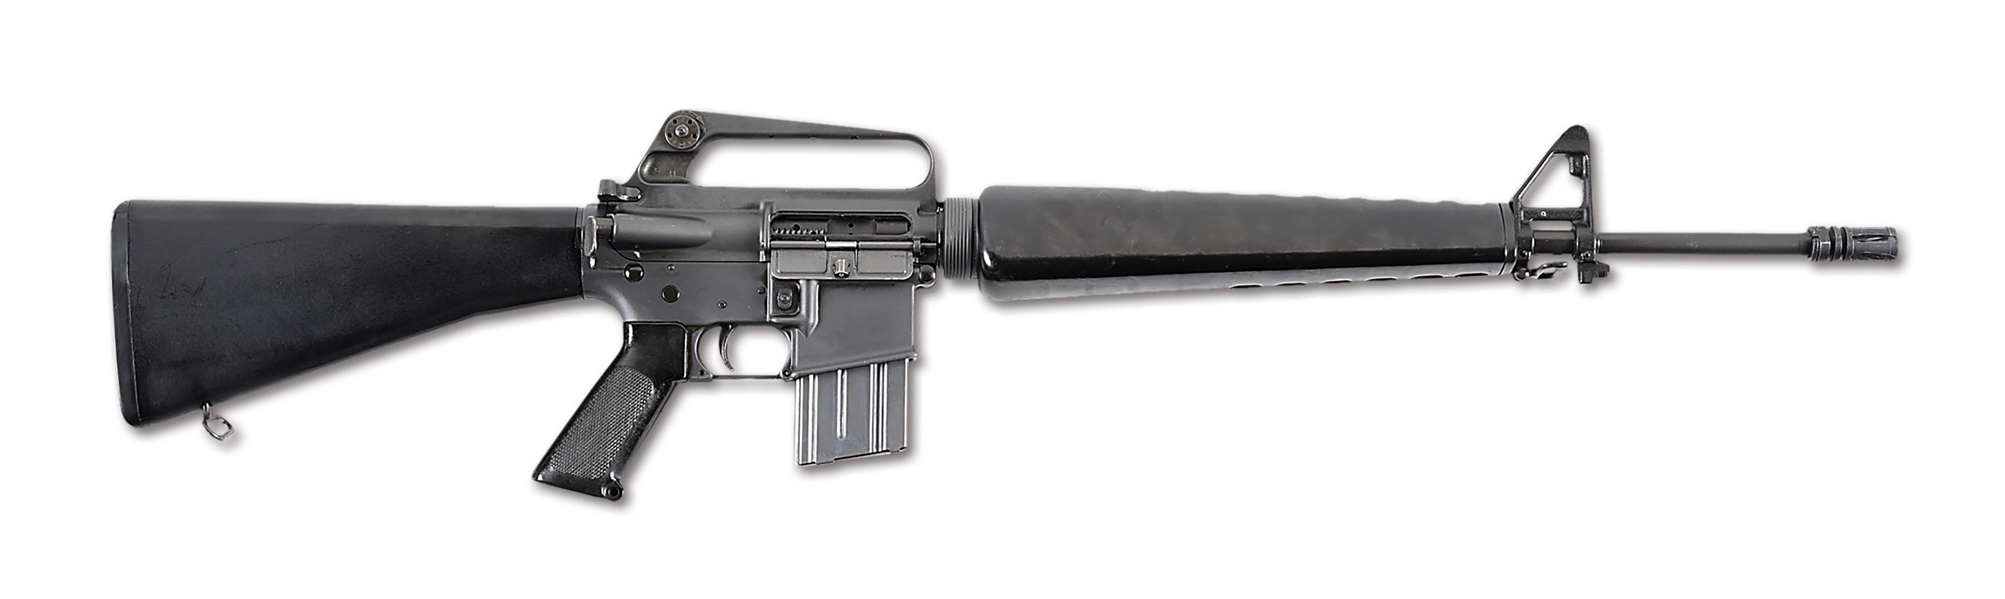 (N) HIGH CONDITION COLT M16 MACHINE GUN (FULLY TRANSFERABLE).